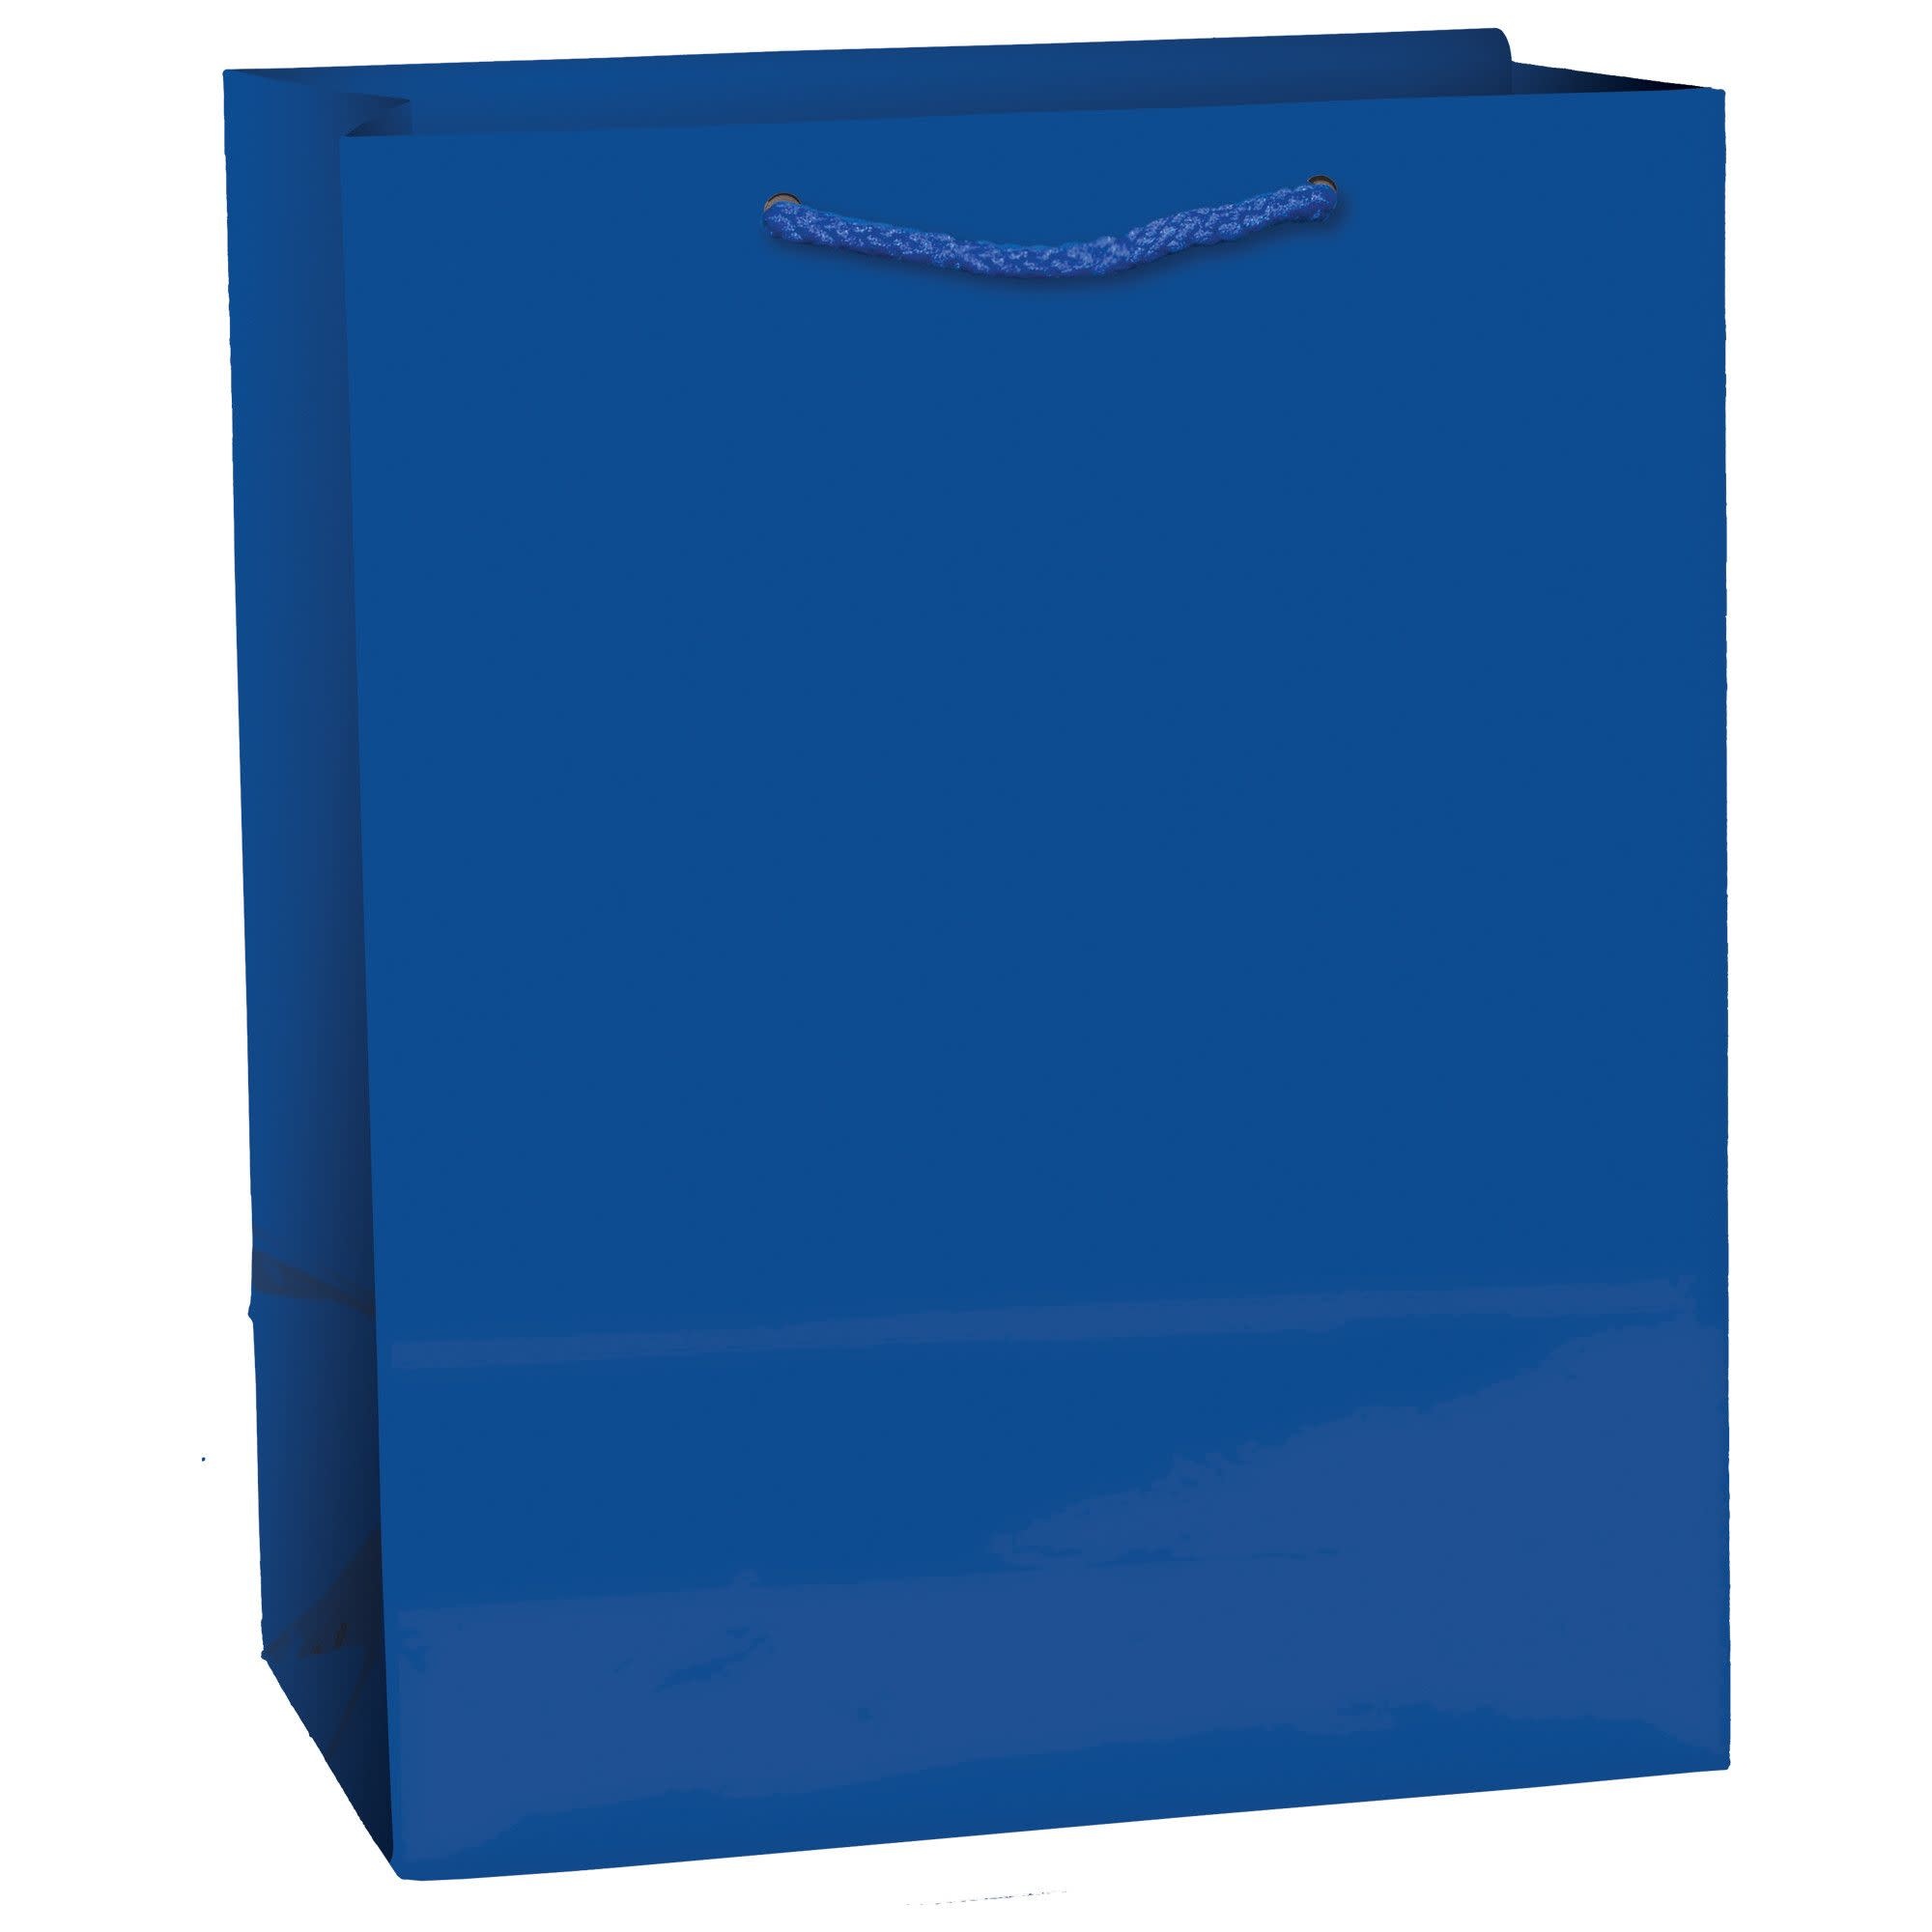 Solid Glossy Bright Royal Blue Medium Bag